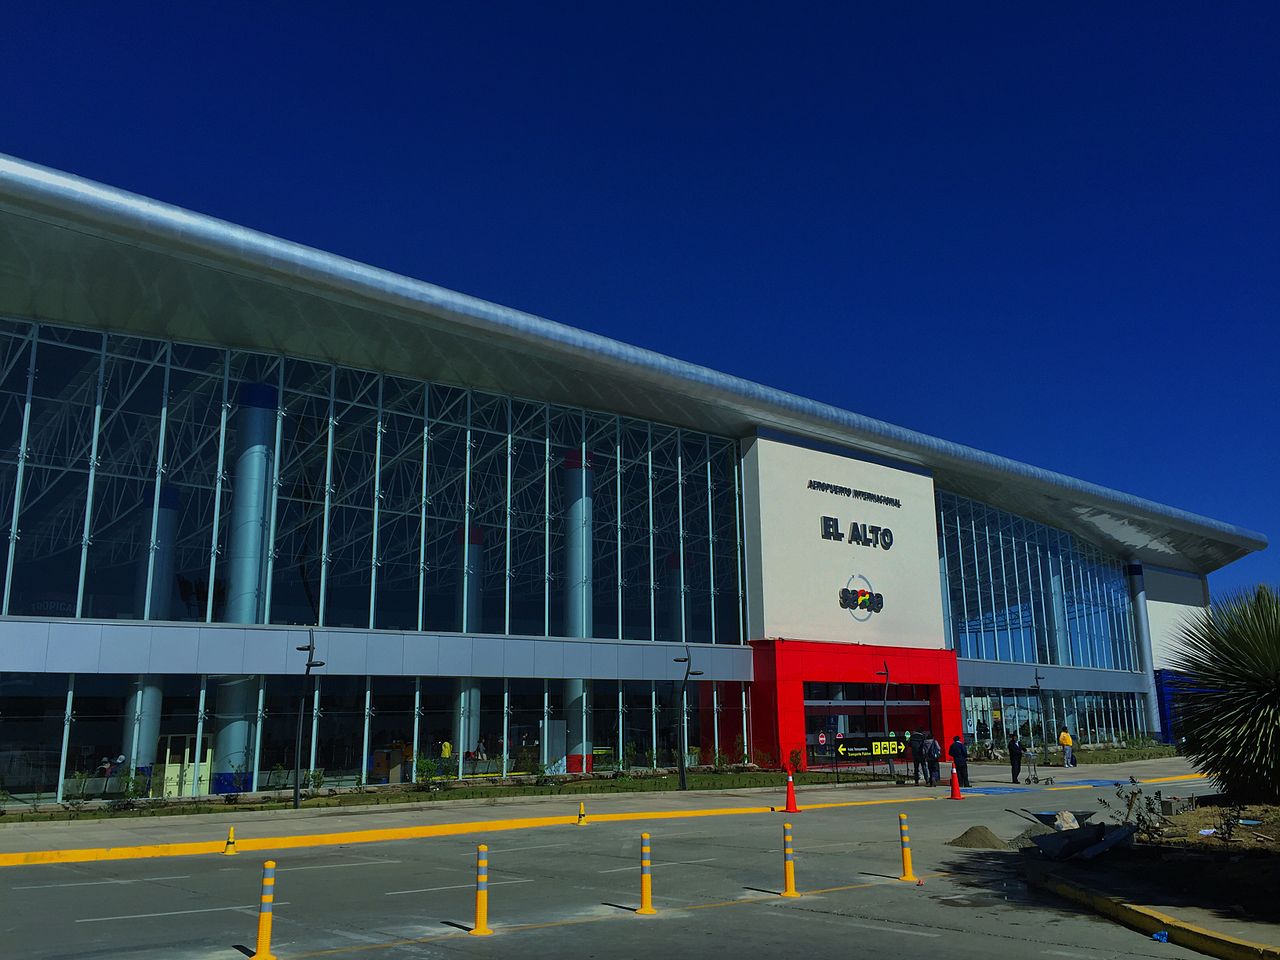 Main terminal of El Alto International Airport